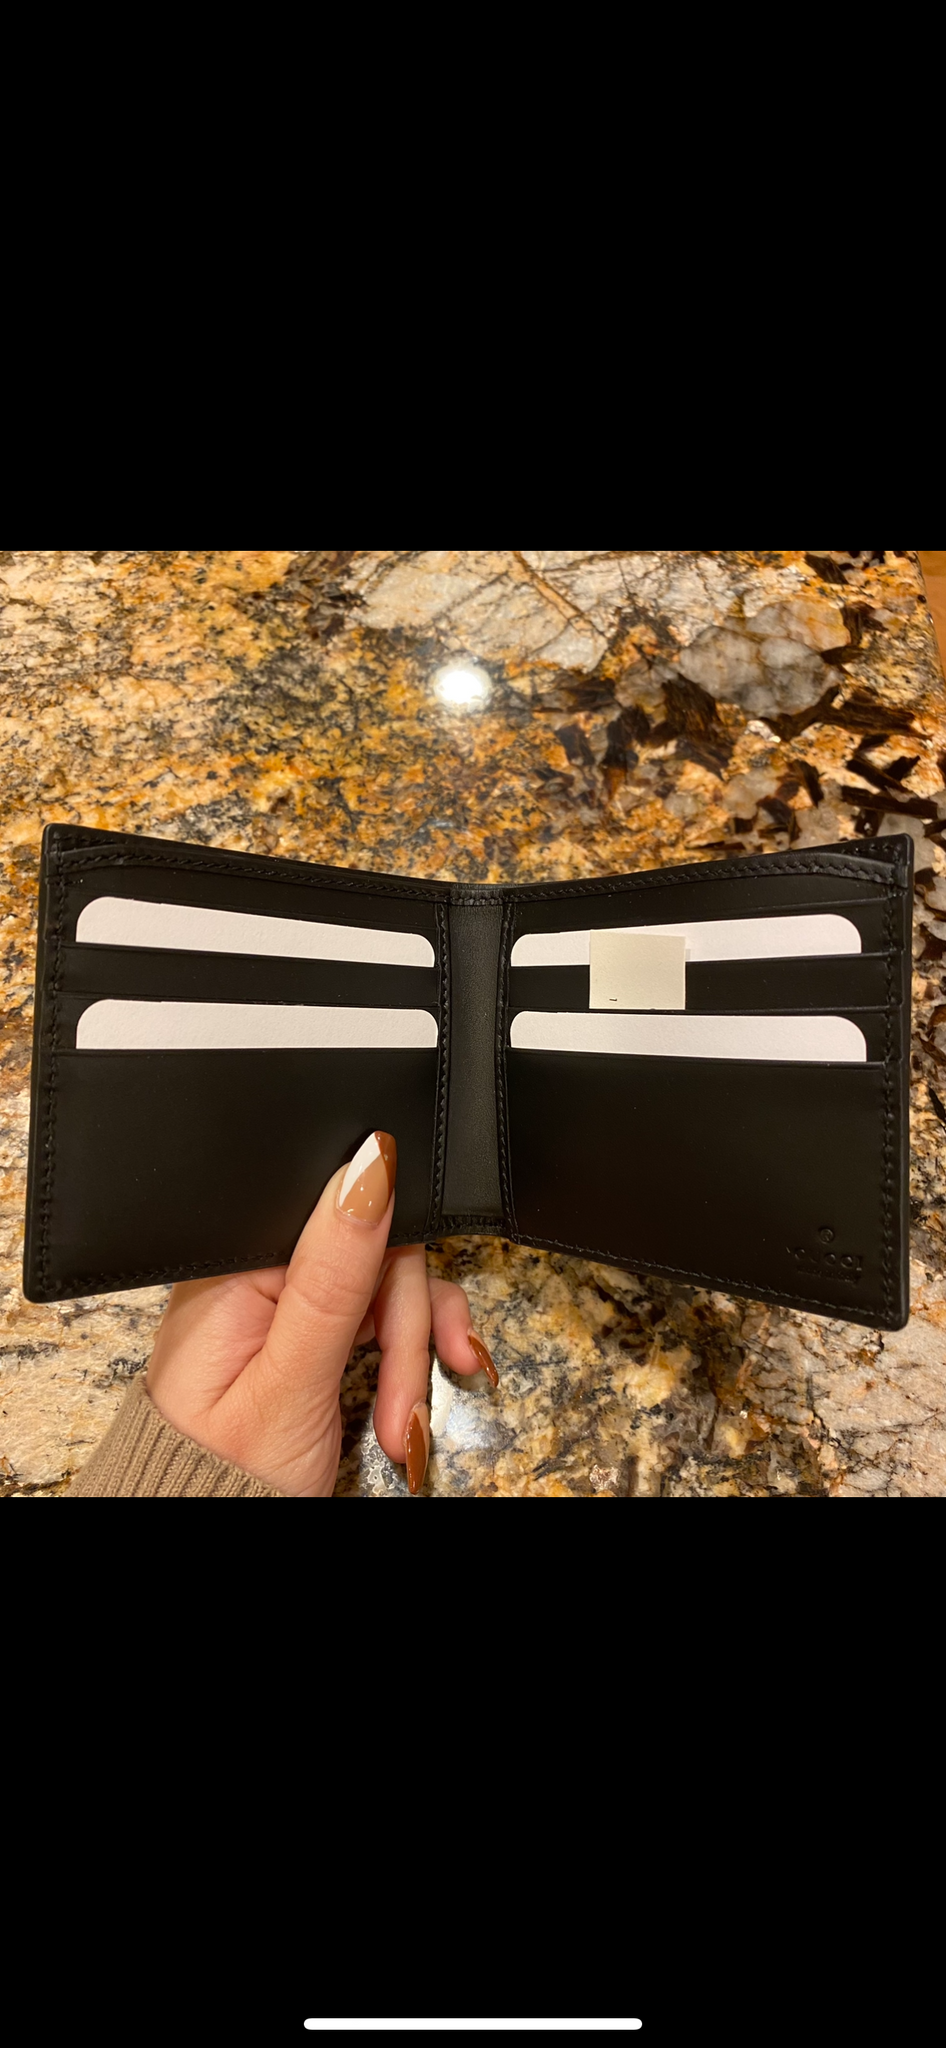 GG Supreme Wallet in Black - Gucci